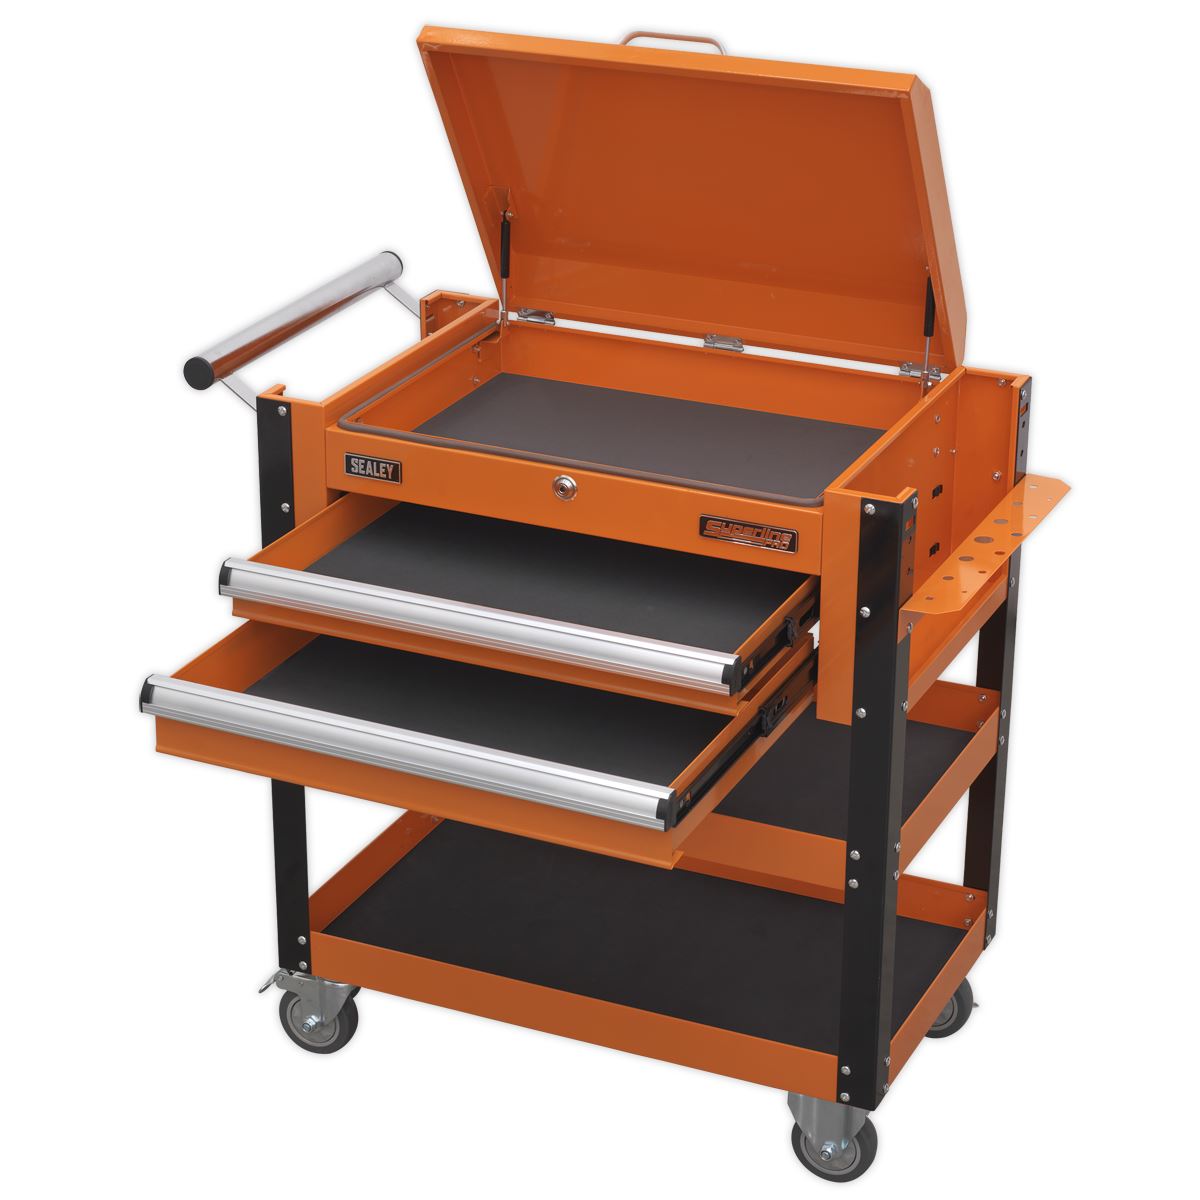 Sealey Superline Pro Heavy-Duty Mobile Tool & Parts Trolley 2 Drawers & Lockable Top - Orange